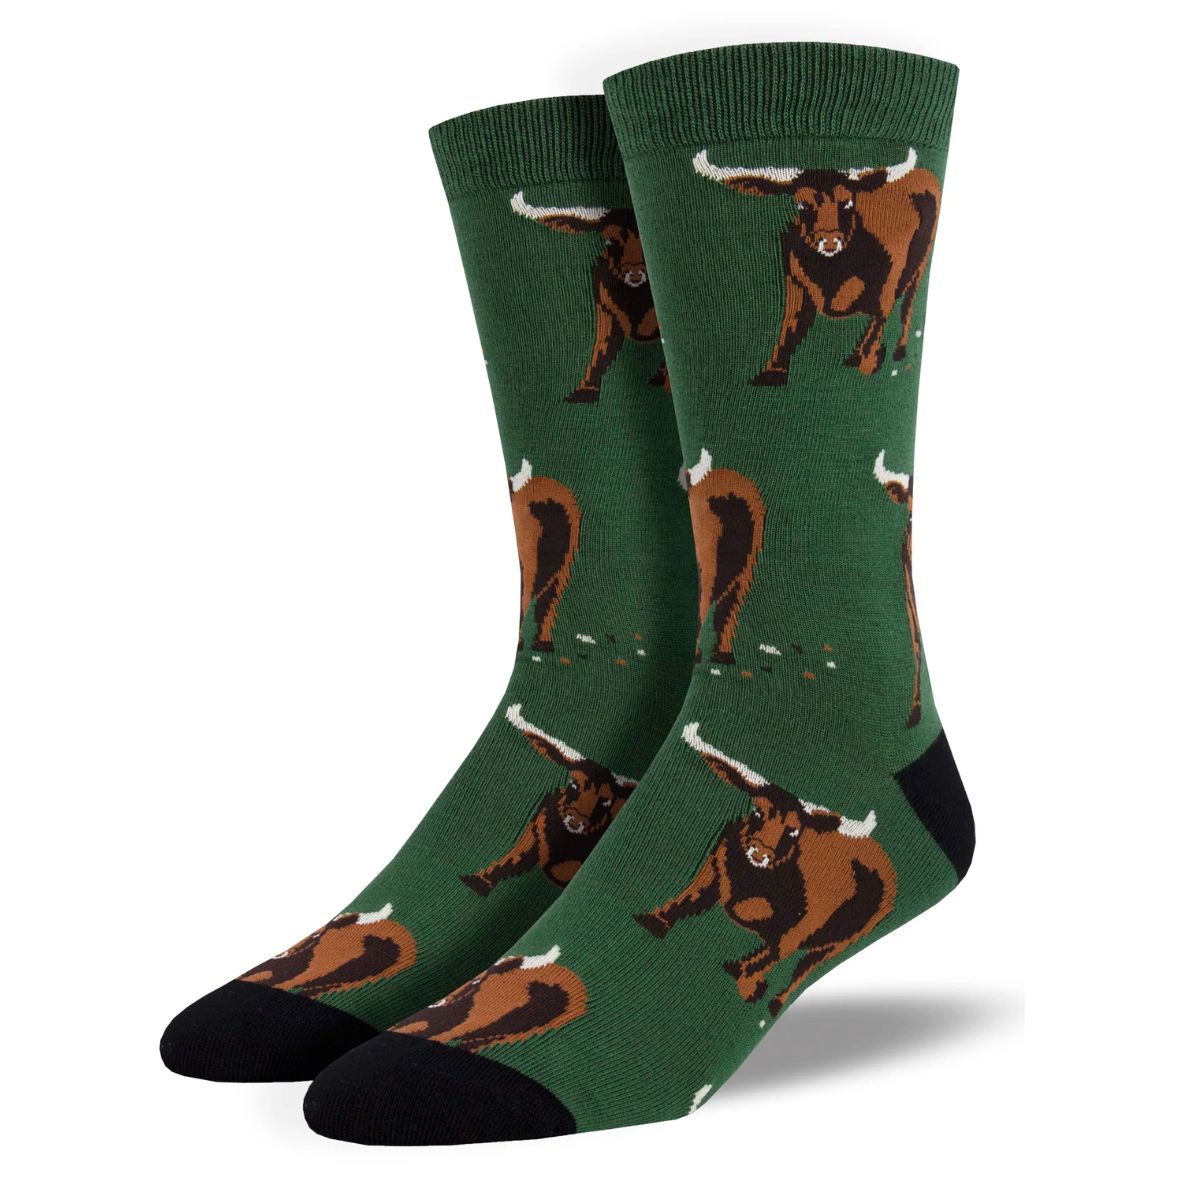 bull socks a pair of green crew socks with bull print